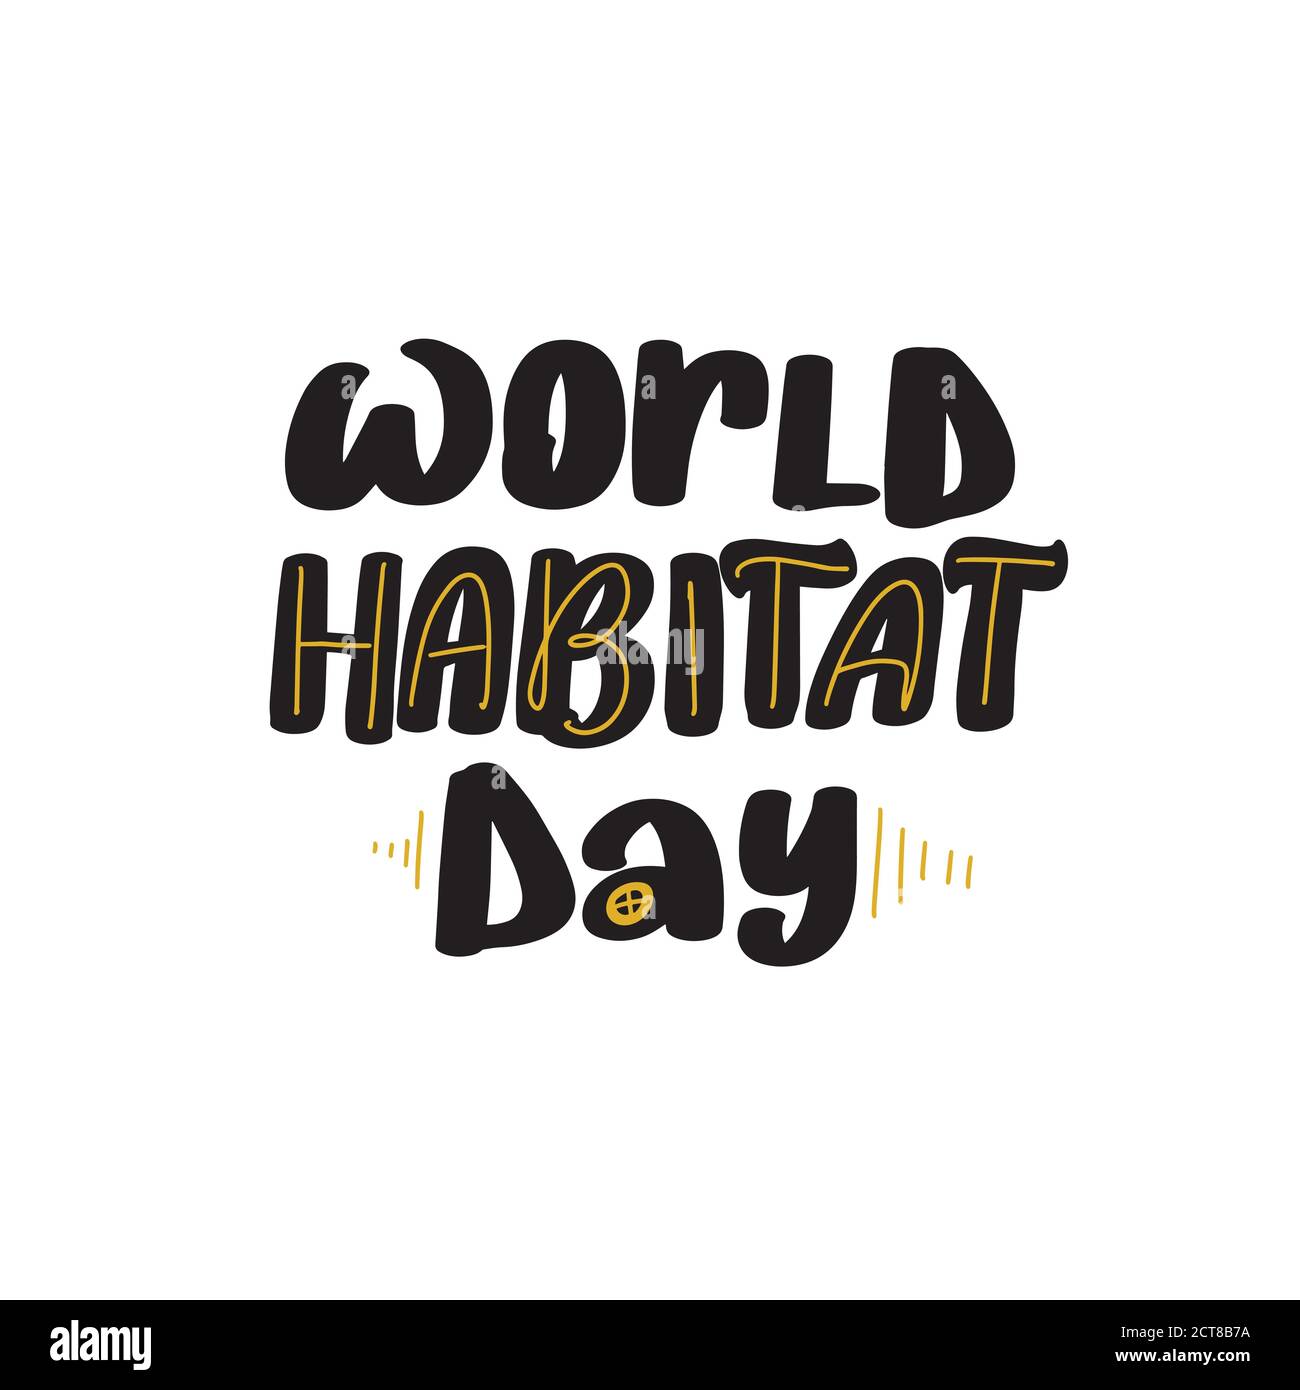 World Habitat Day. Great vector stock calligraphy illustratio Stock Vector